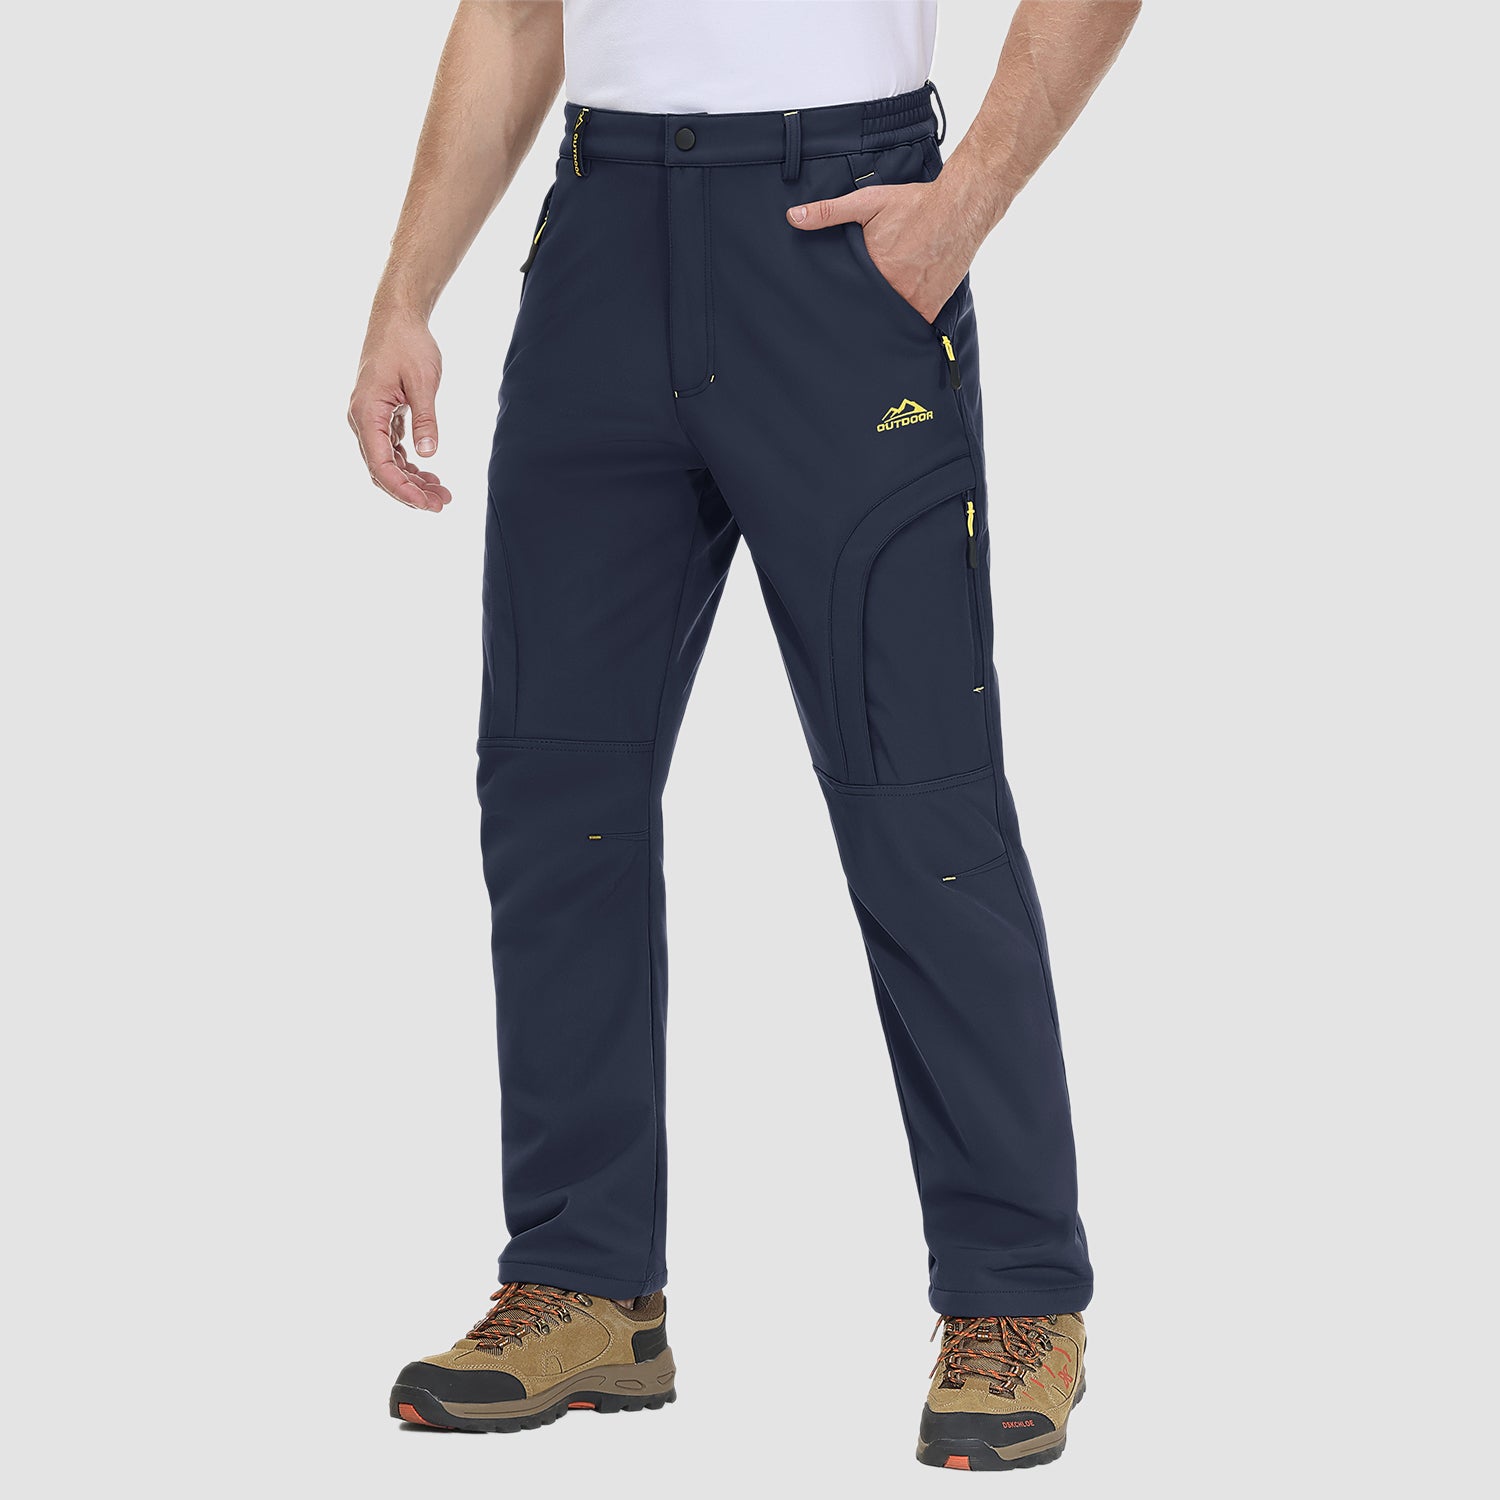 Men's Winter Pants with 5 Zip Pockets Snow Ski Pants Fleece Lined Water Resistant Hiking Pants